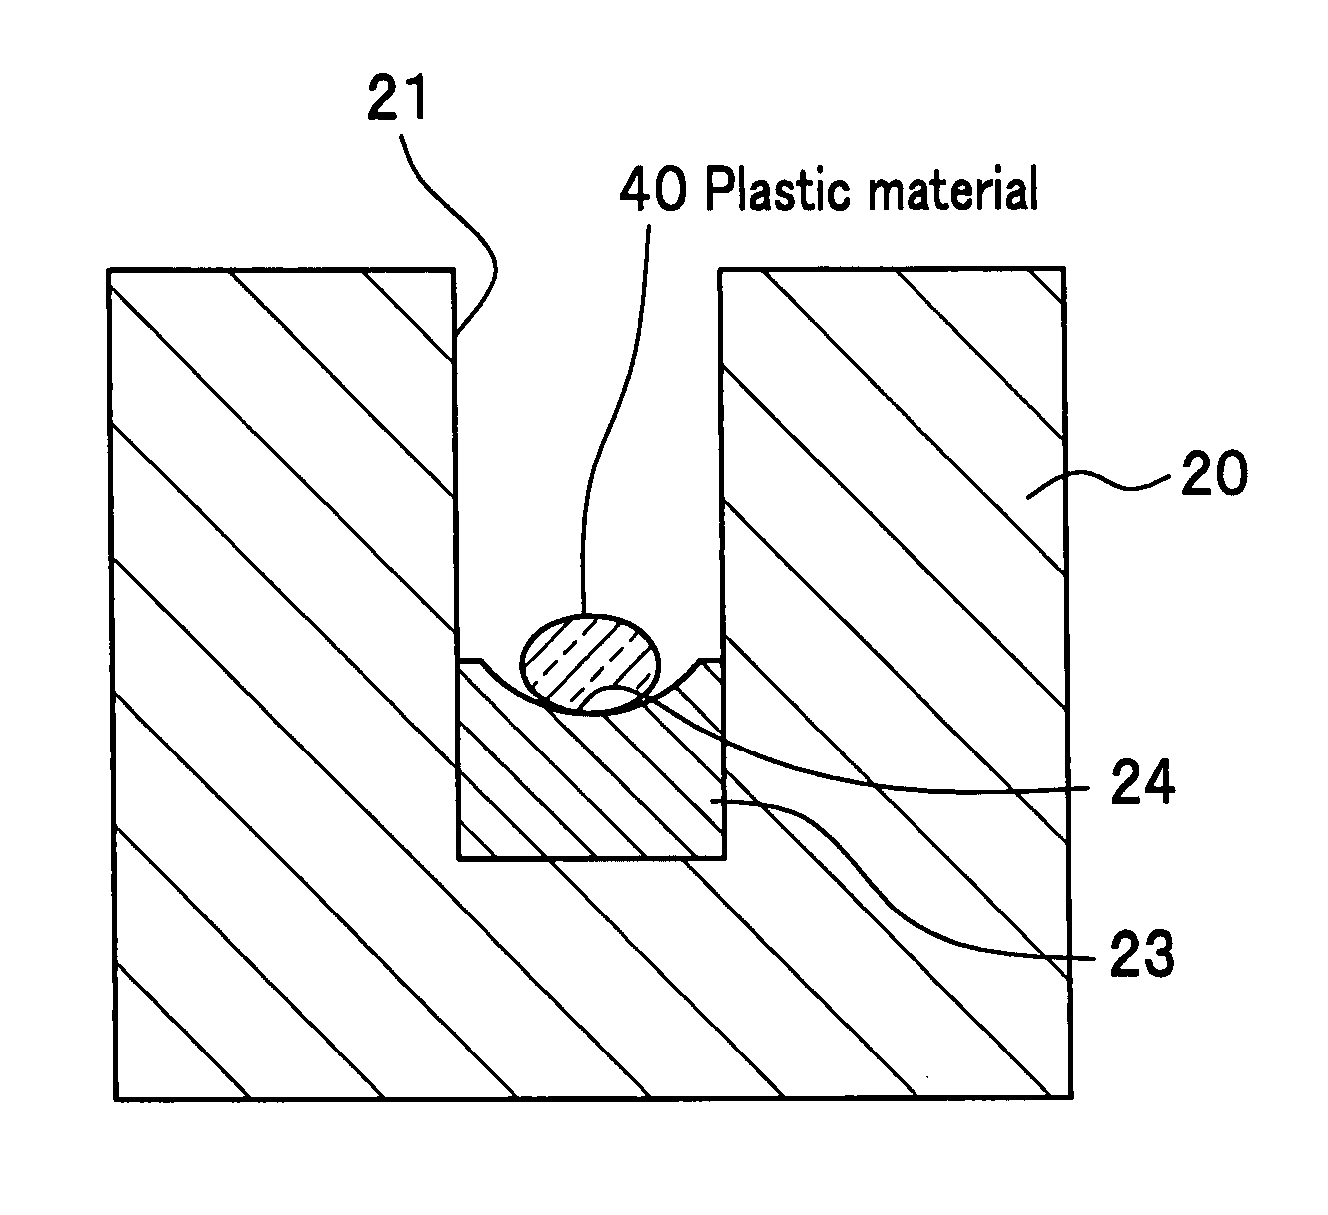 Molding method of plastic materials